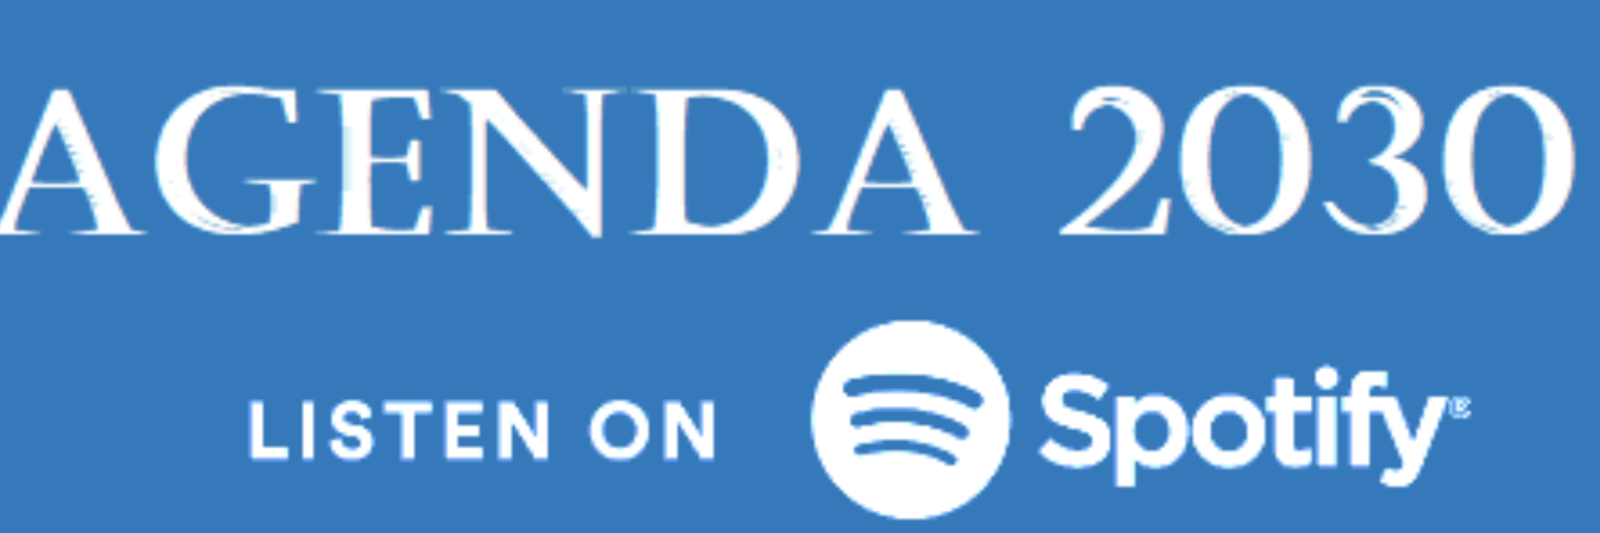 AGENDA 2030 LISTEN ON SPOTIFY